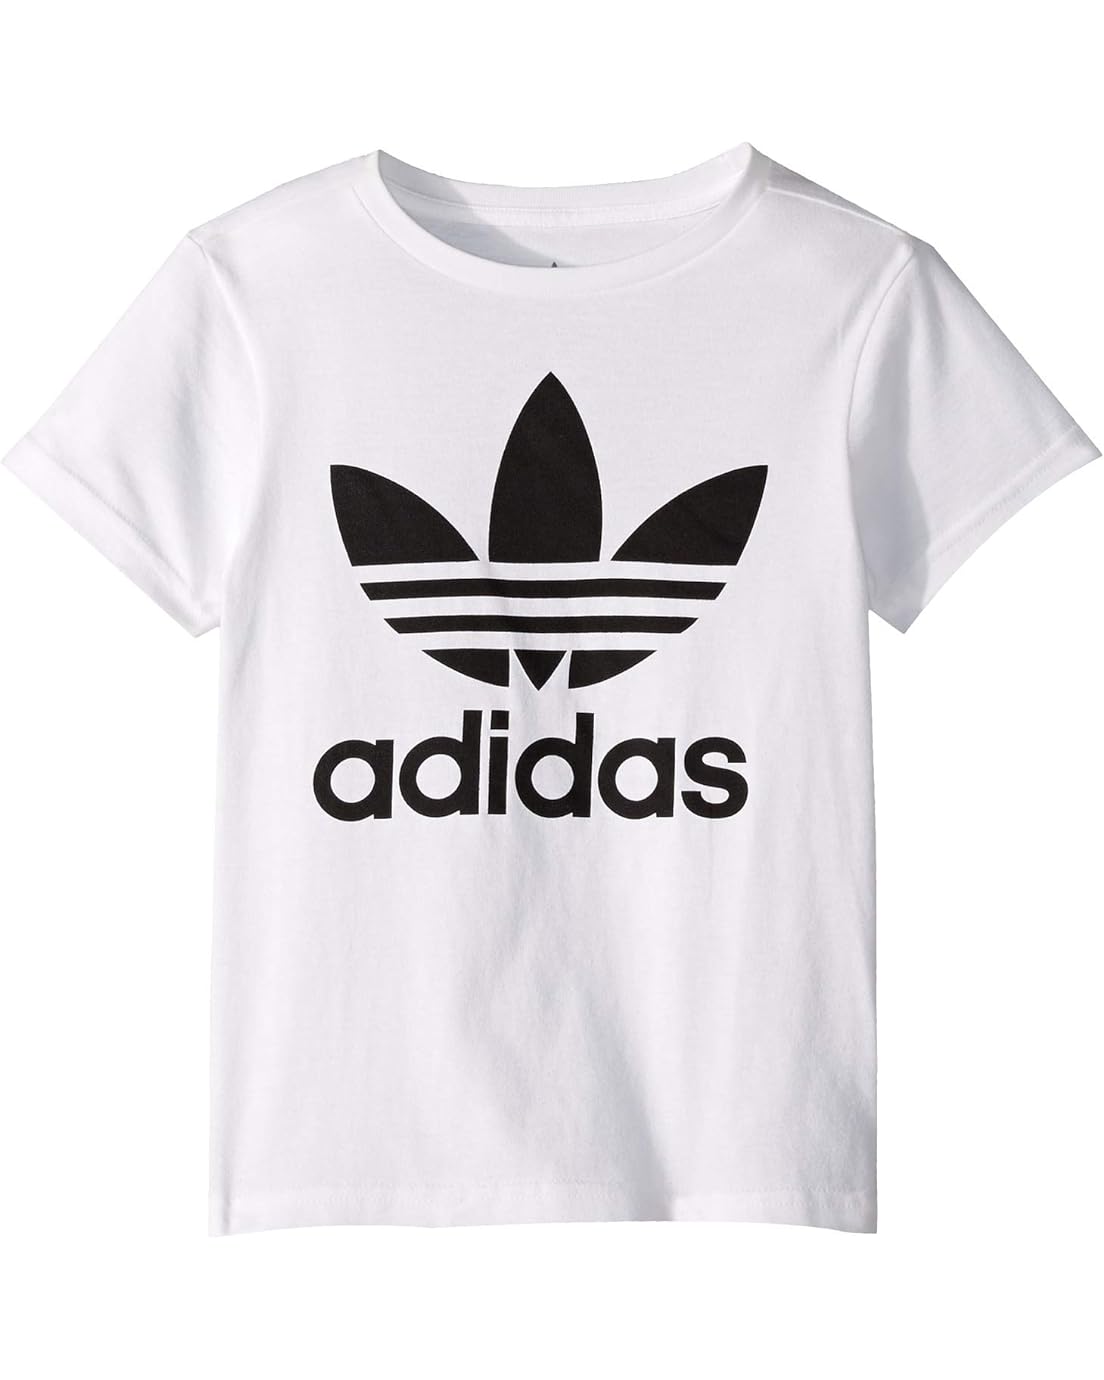 Adidas Originals Kids Trefoil Tee (Little Kids/Big Kids)